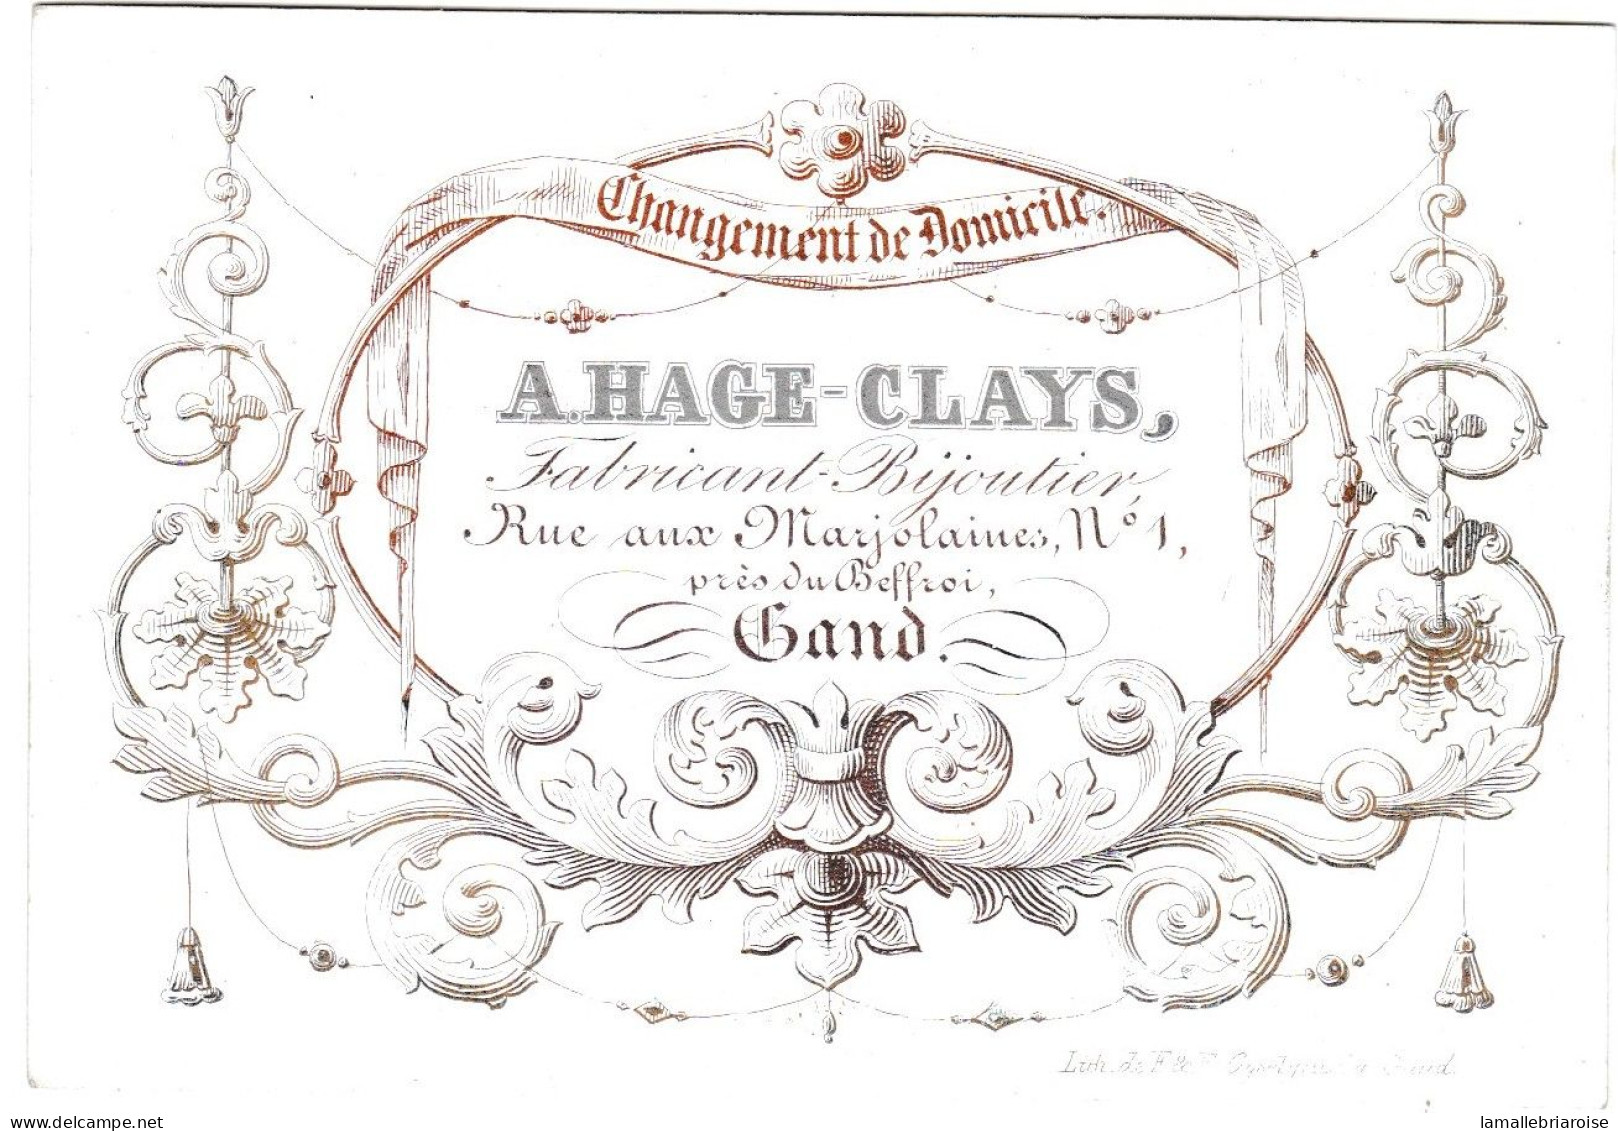 Belgique "Carte Porcelaine" Porseleinkaart, A.Hage - Clays, Bijoutier, Gand, Dim:108x 75mm - Porzellan